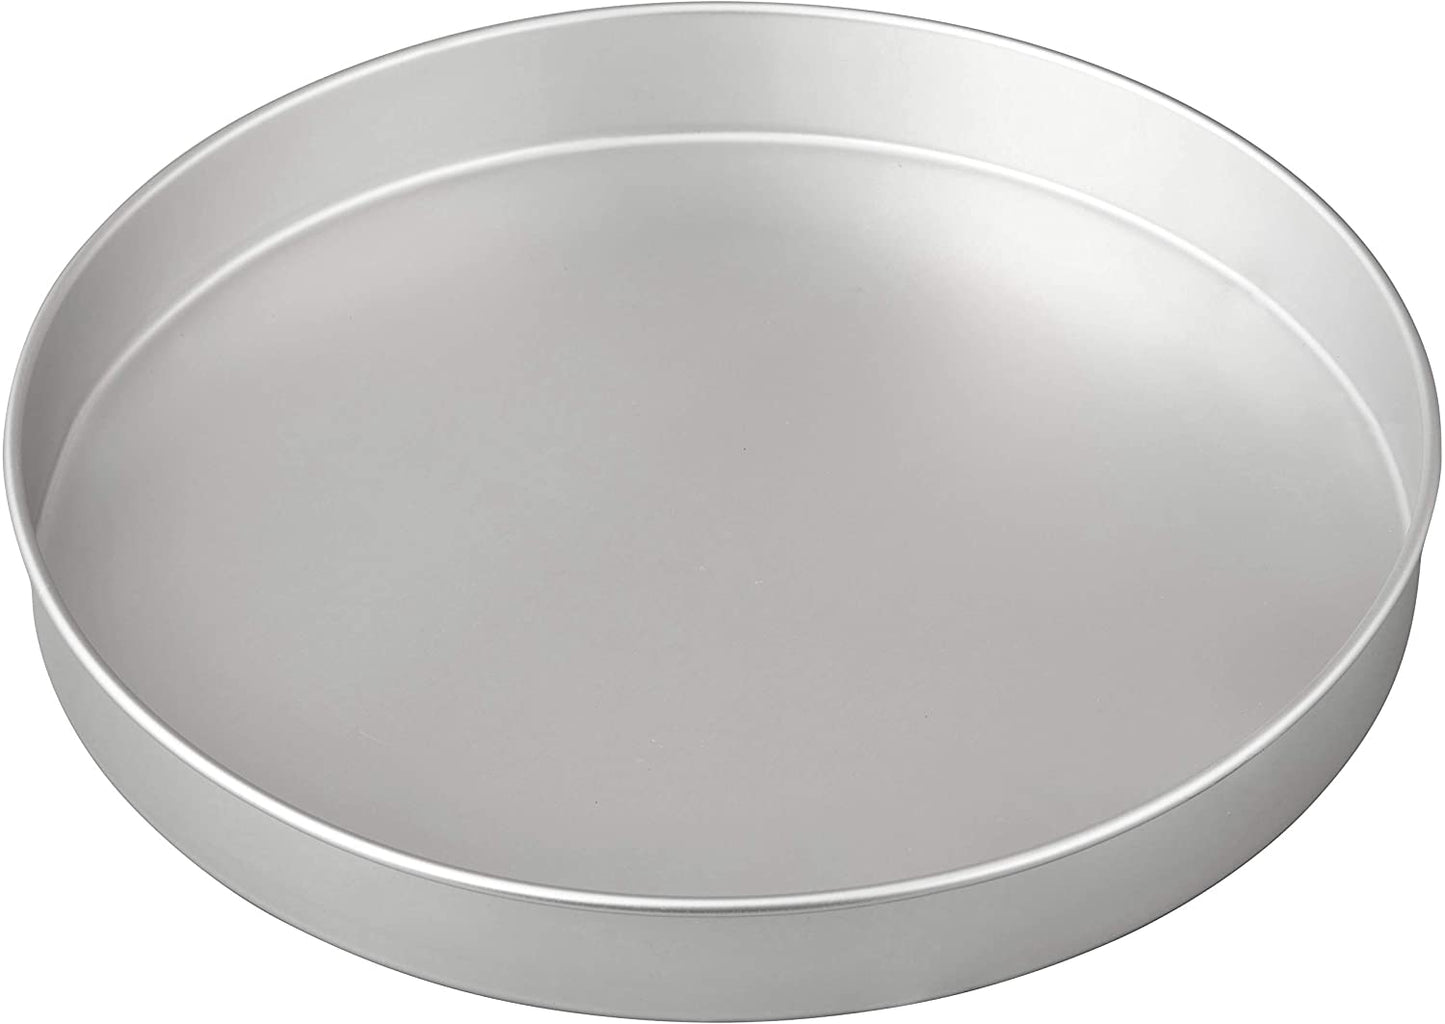 10" Aluminum Round Baking Tray